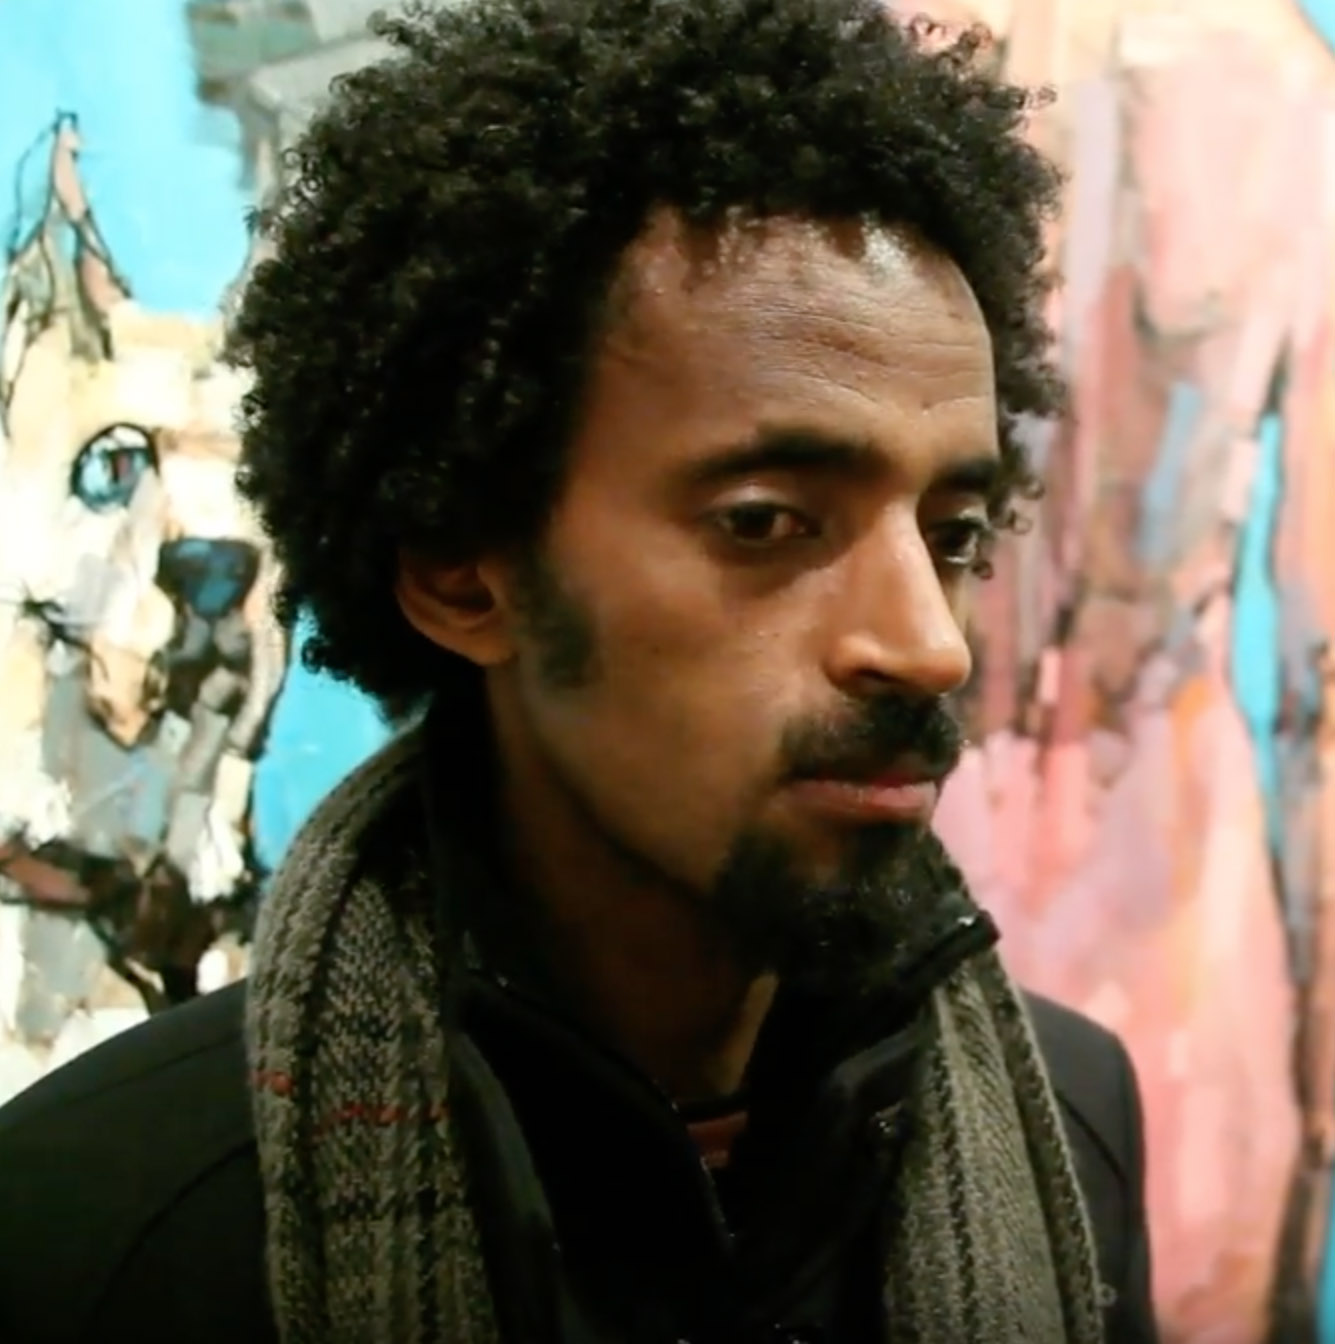 Dawit Abebe, Artist